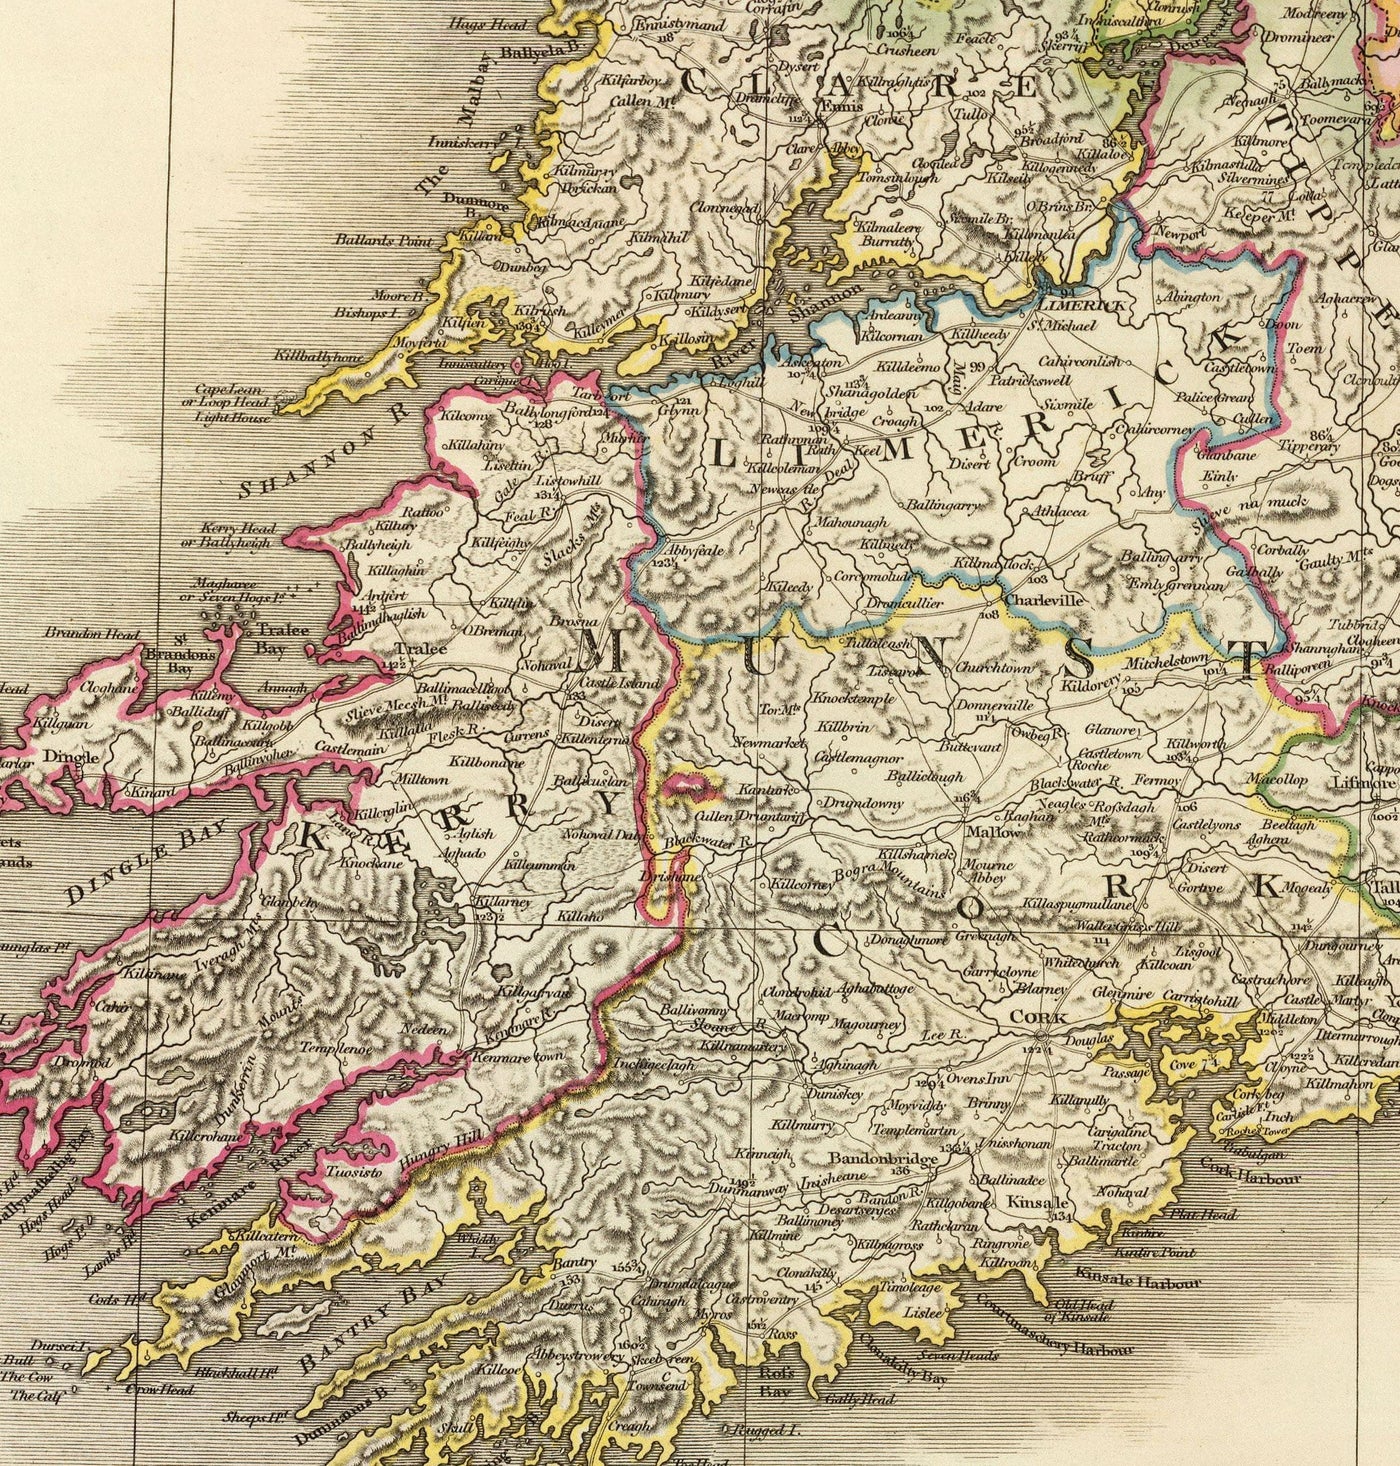 Old Map of Ireland in 1798 by W. Faden - Rare Colour Atlas Map - Dublin, Belfast, Cork